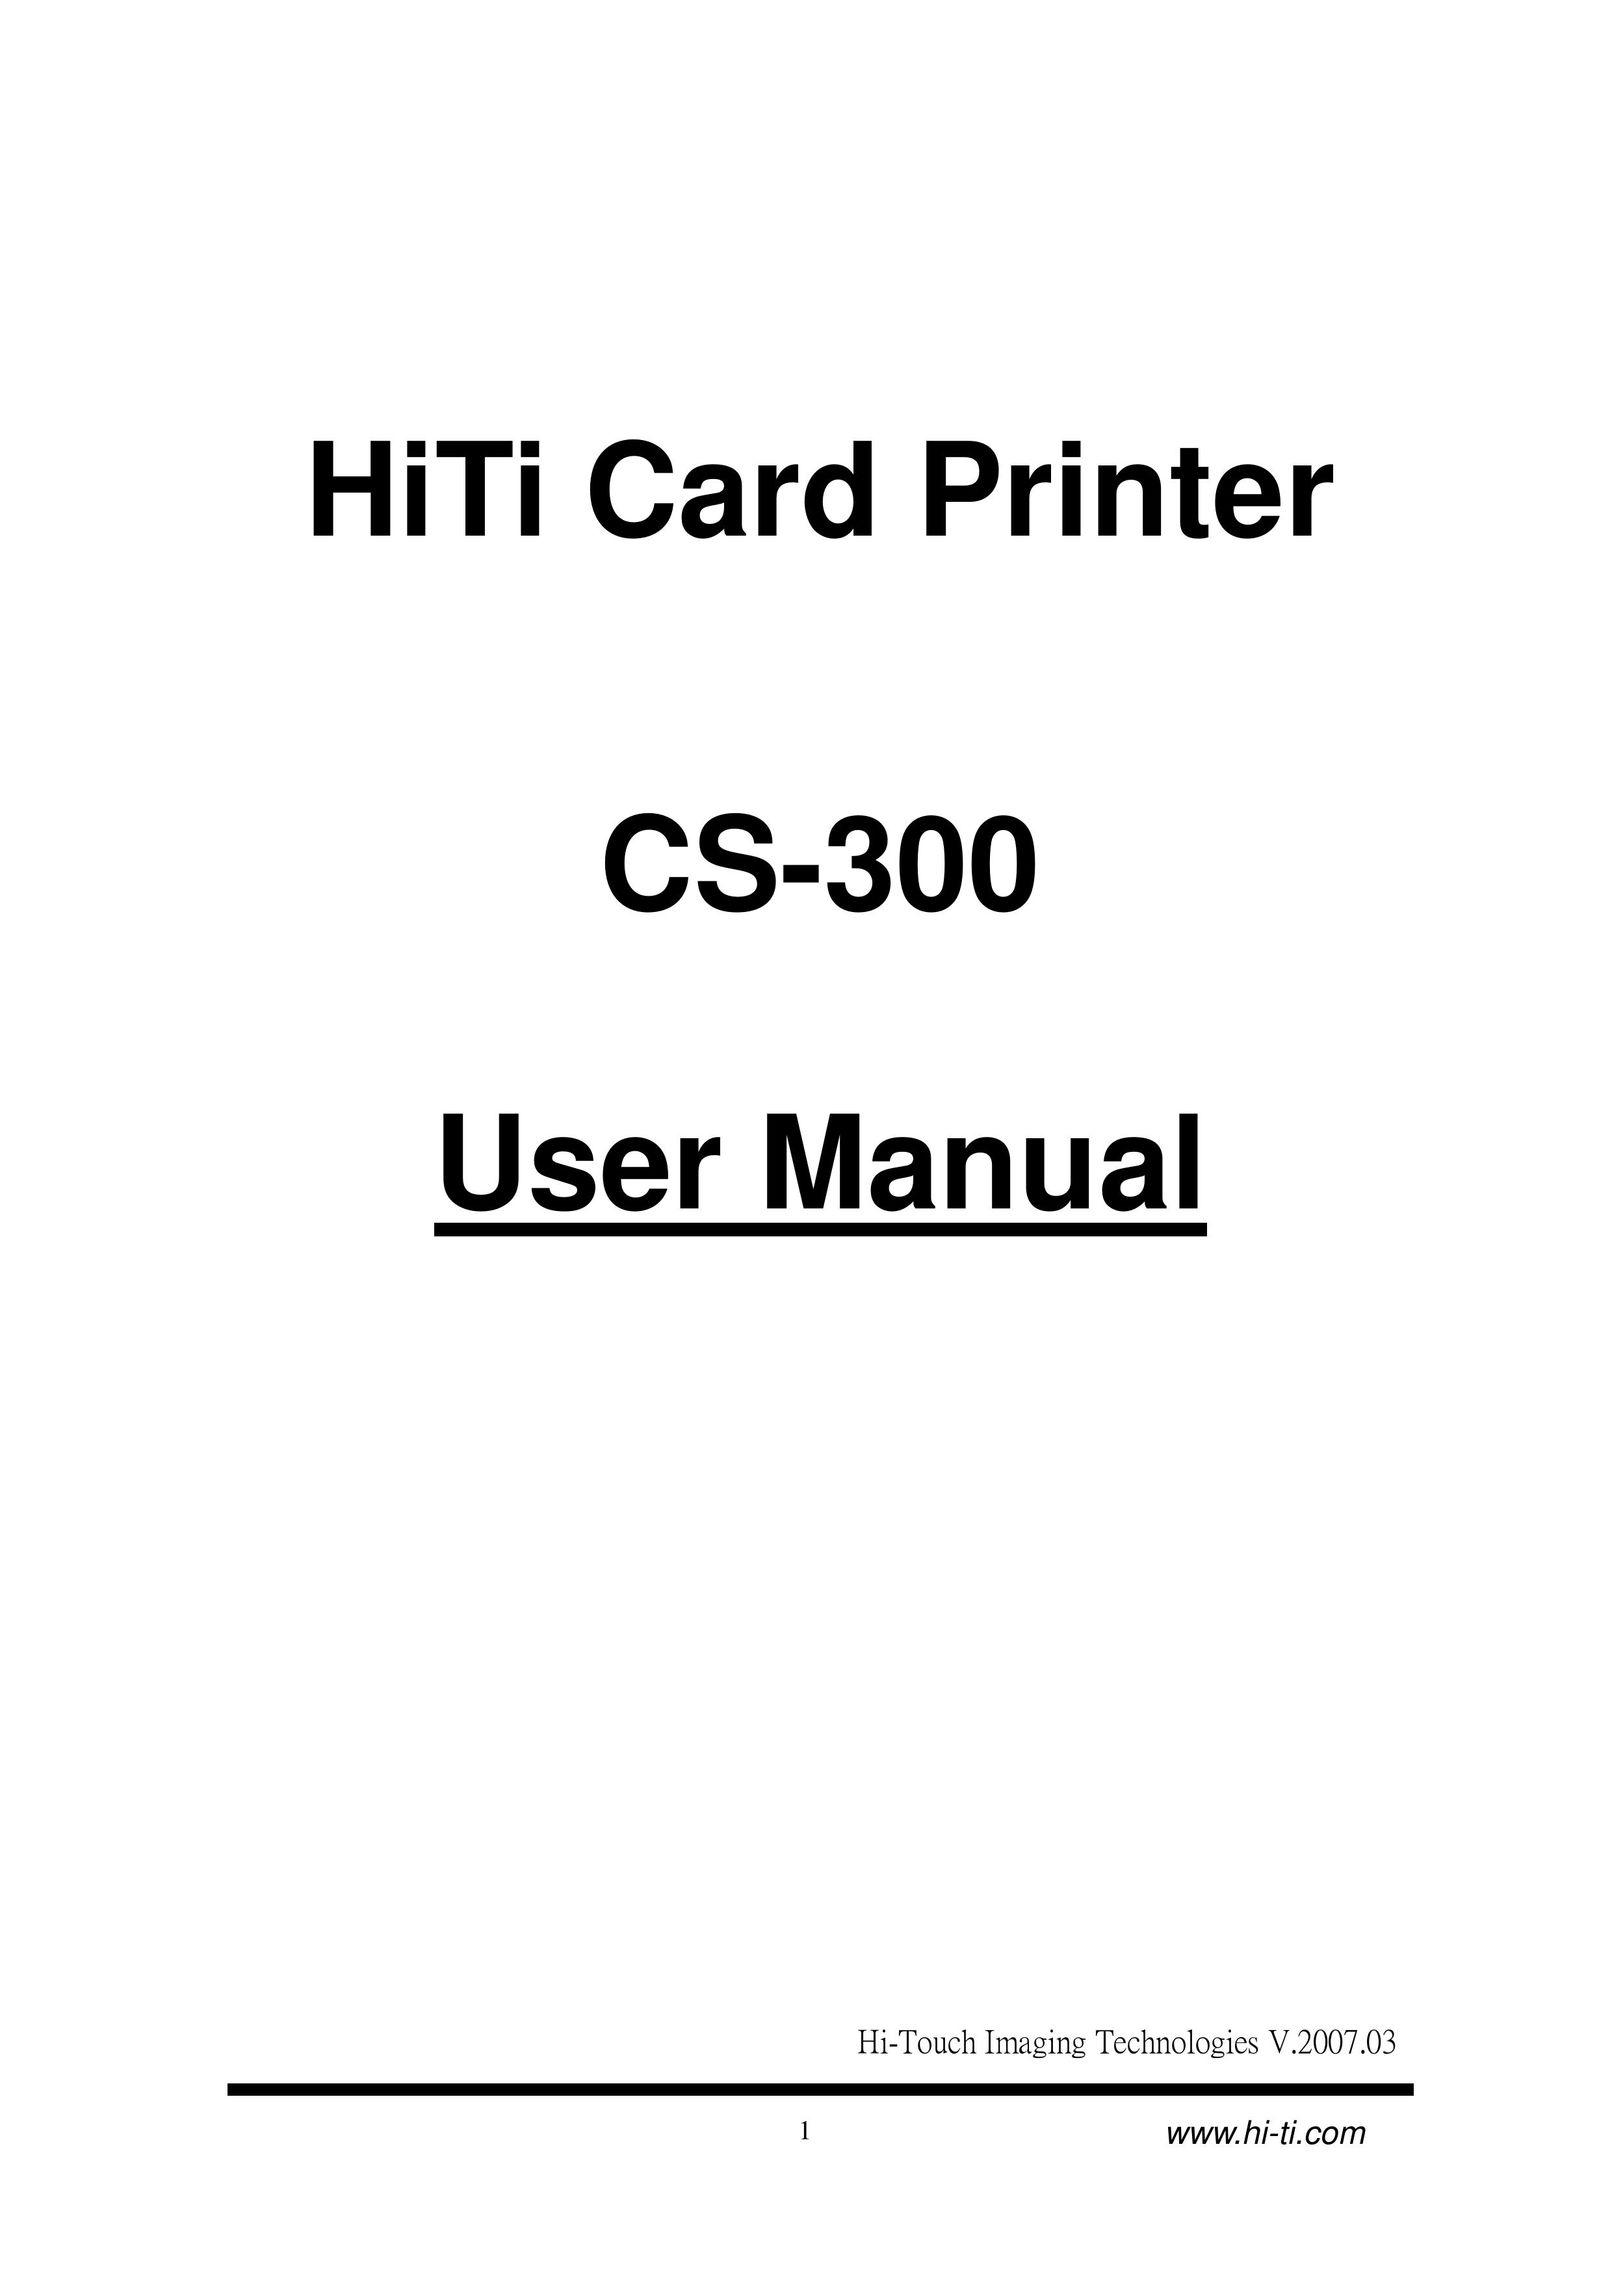 Hi-Touch Imaging Technologies CS-300 Printer User Manual